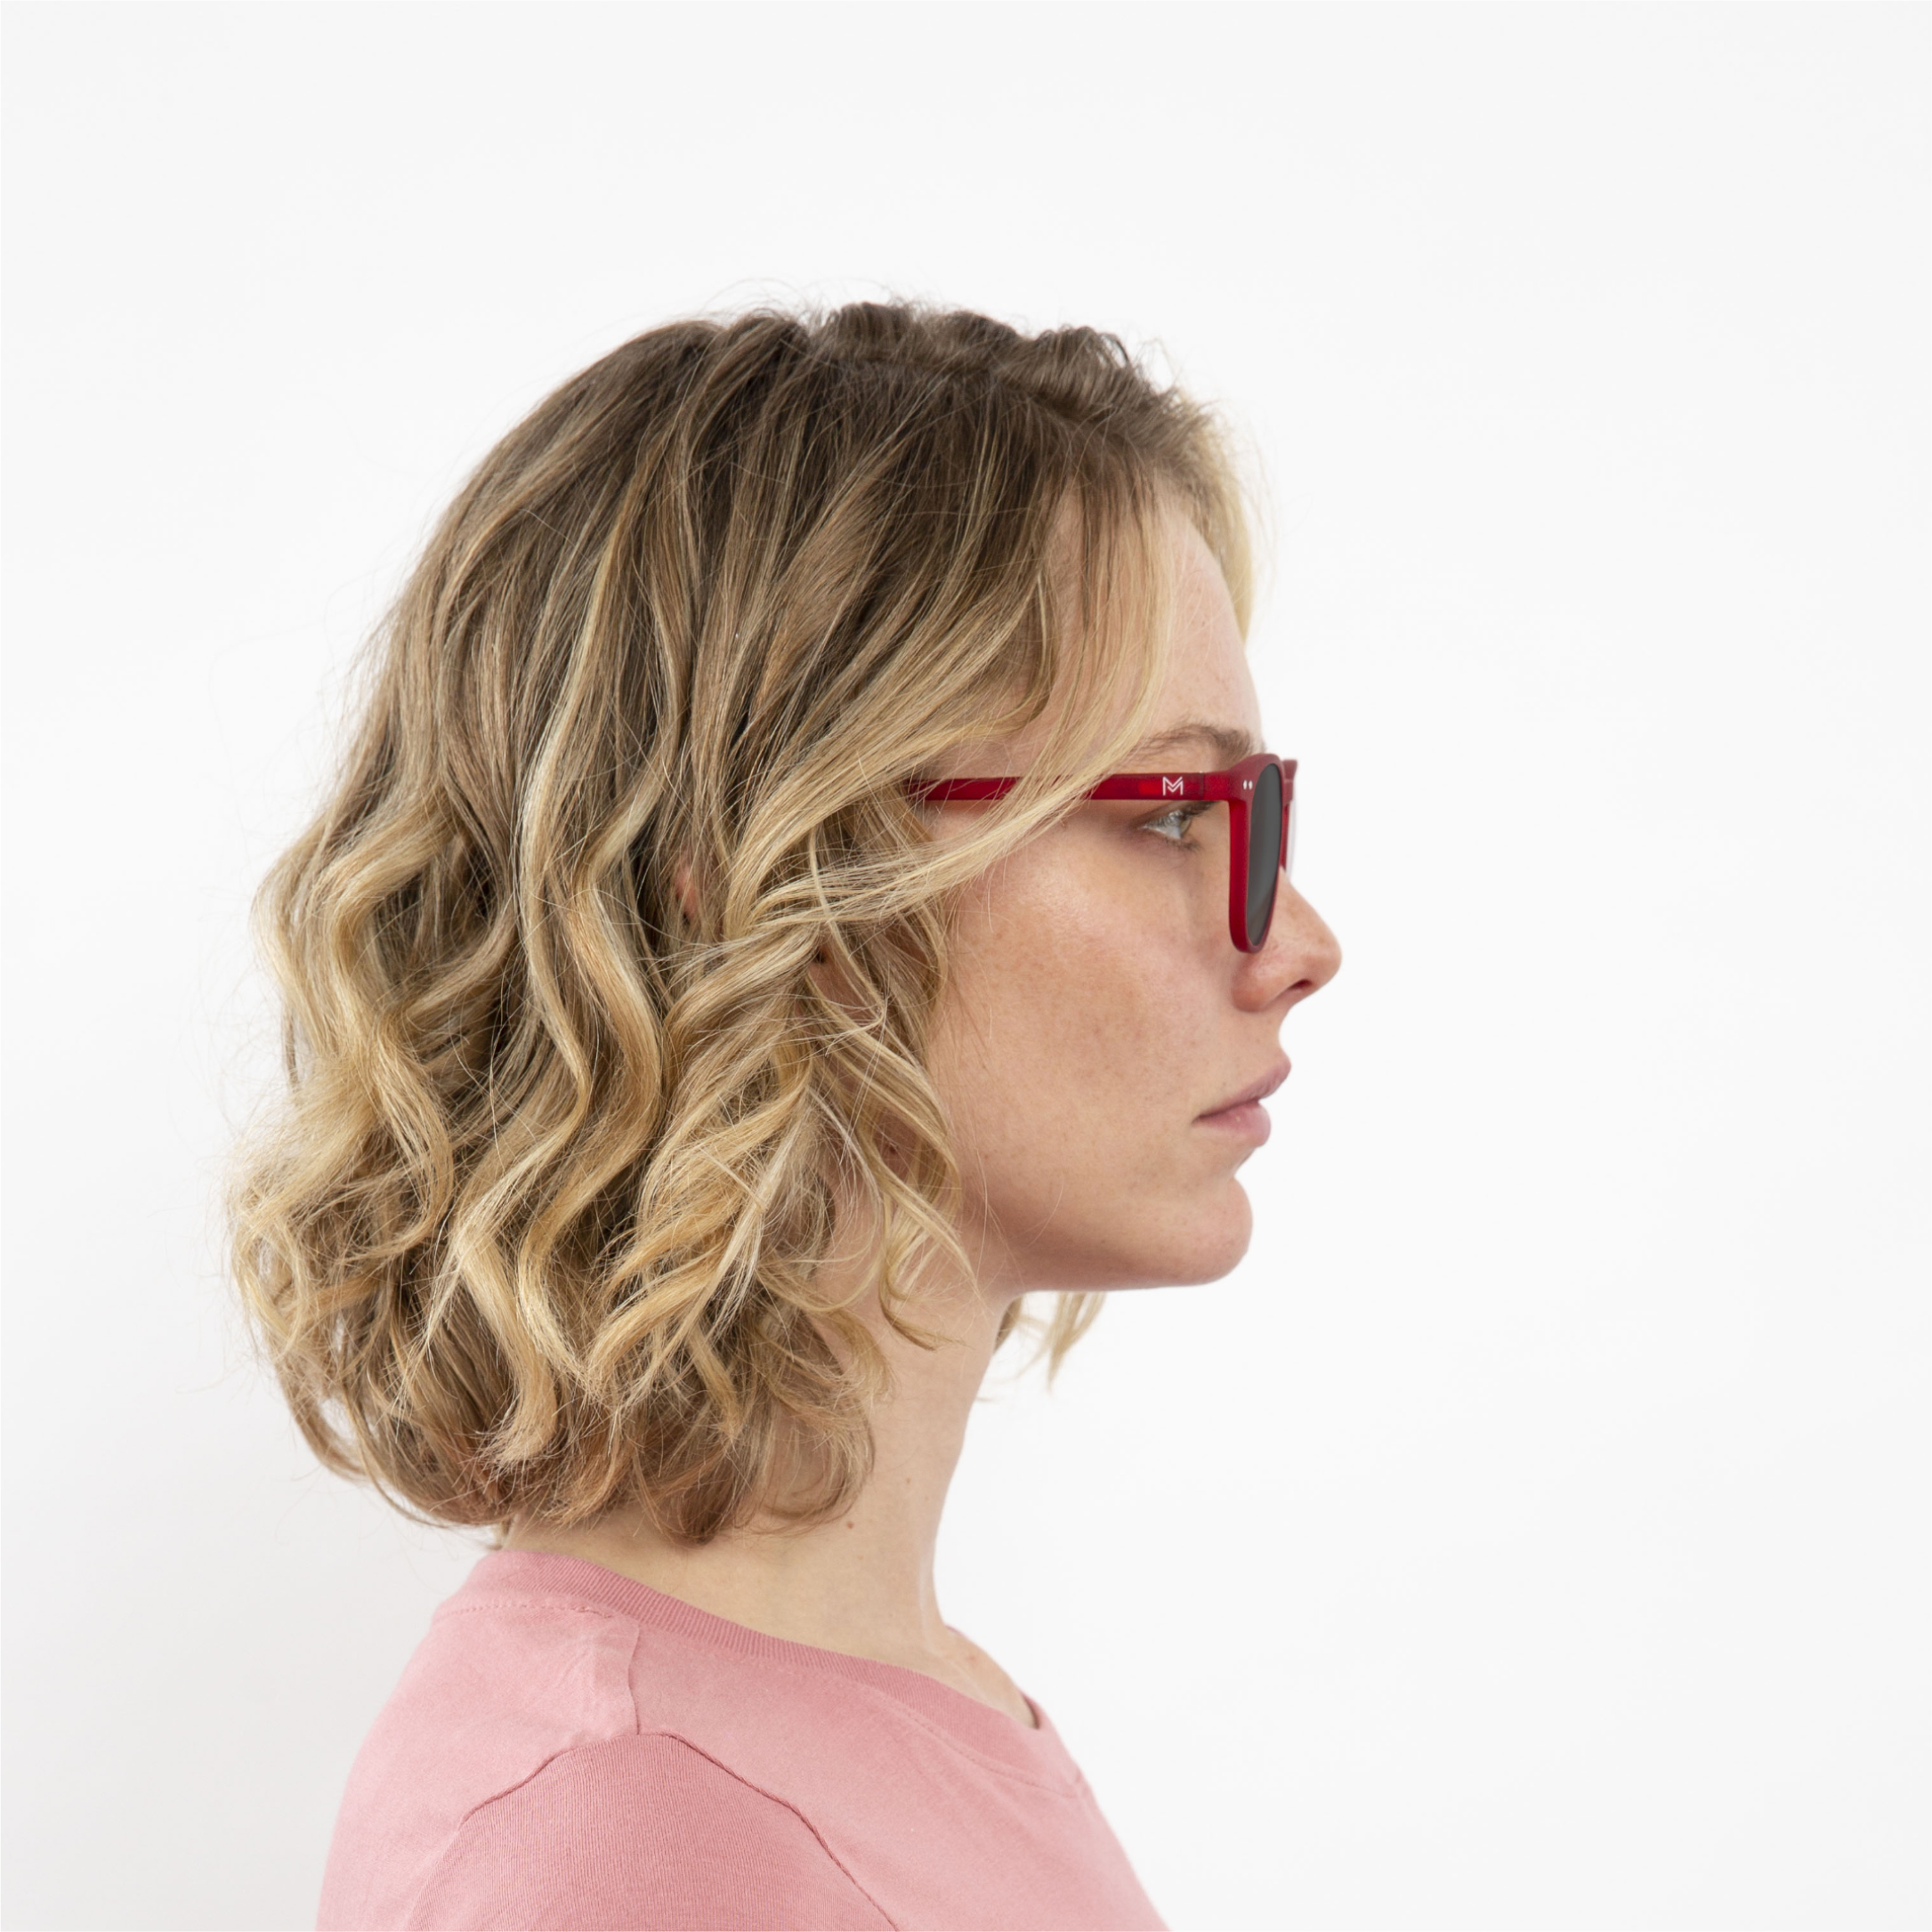 ochelari heliomati si tranzitie lentile gri femei william rosie profil